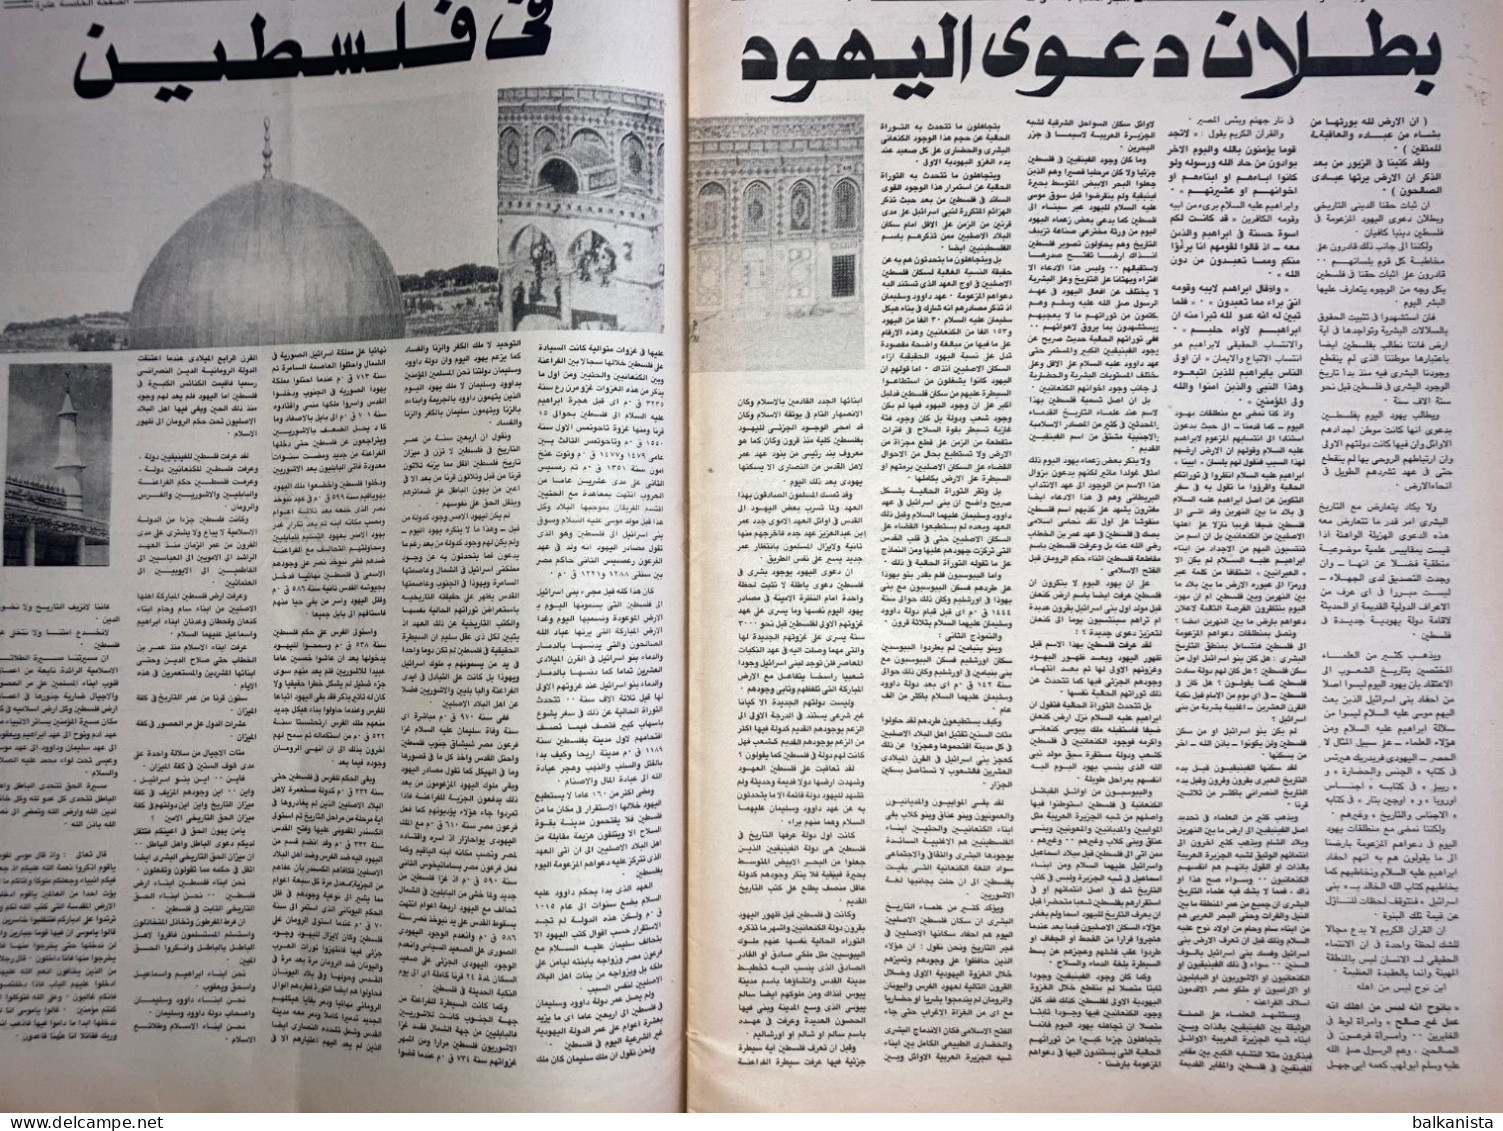 Saudi Arabia  Akhbar al-Alam al-Islami Newspaper  15 September 1980